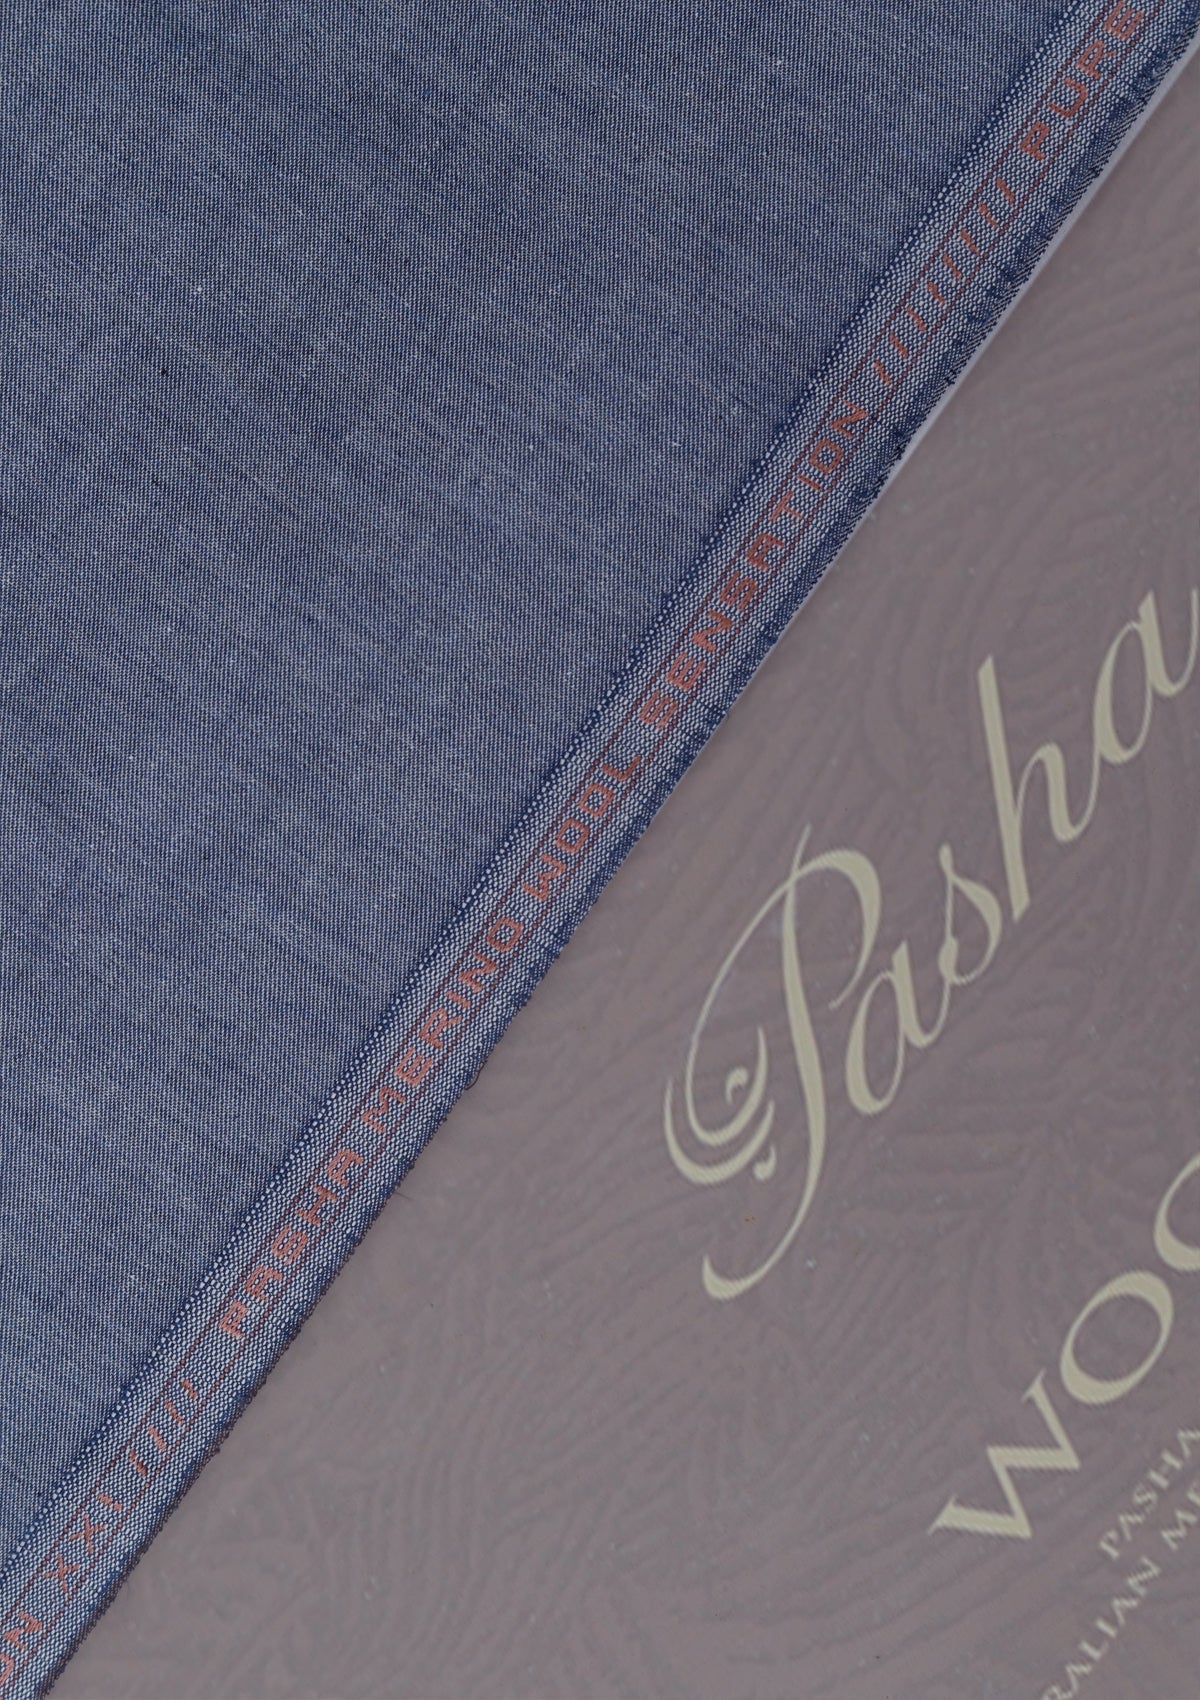 Pasha Australian Merino Woolcot Color# 091 (C Tulley) available at Saleem Fabrics Traditions